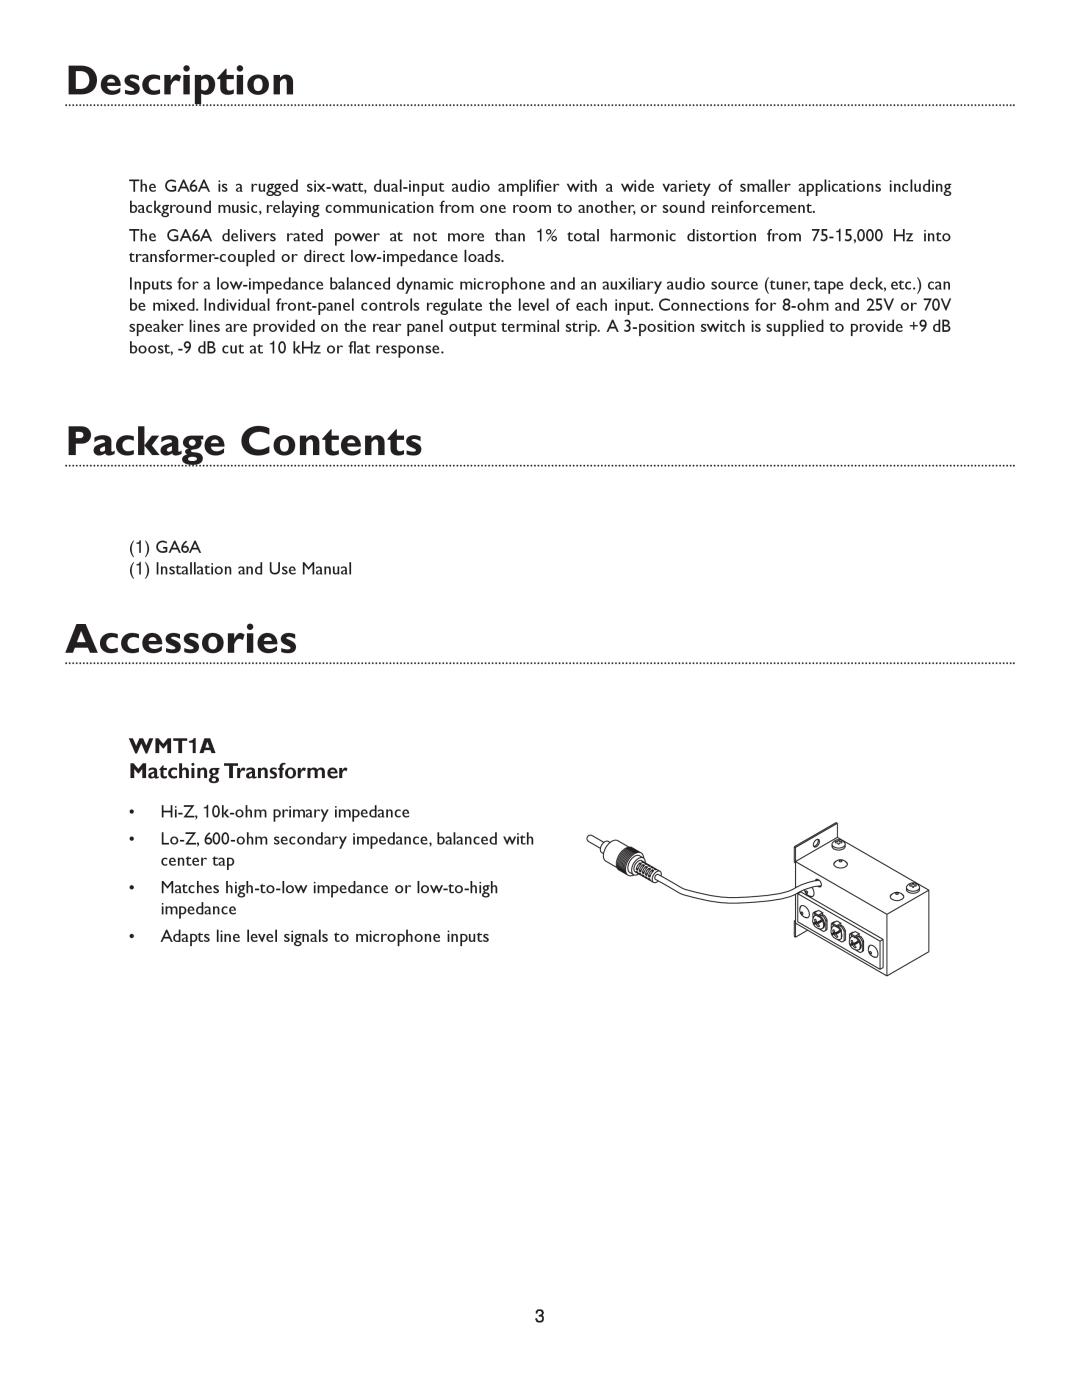 Bogen GA6A specifications Description, Package Contents, Accessories, WMT1A Matching Transformer 